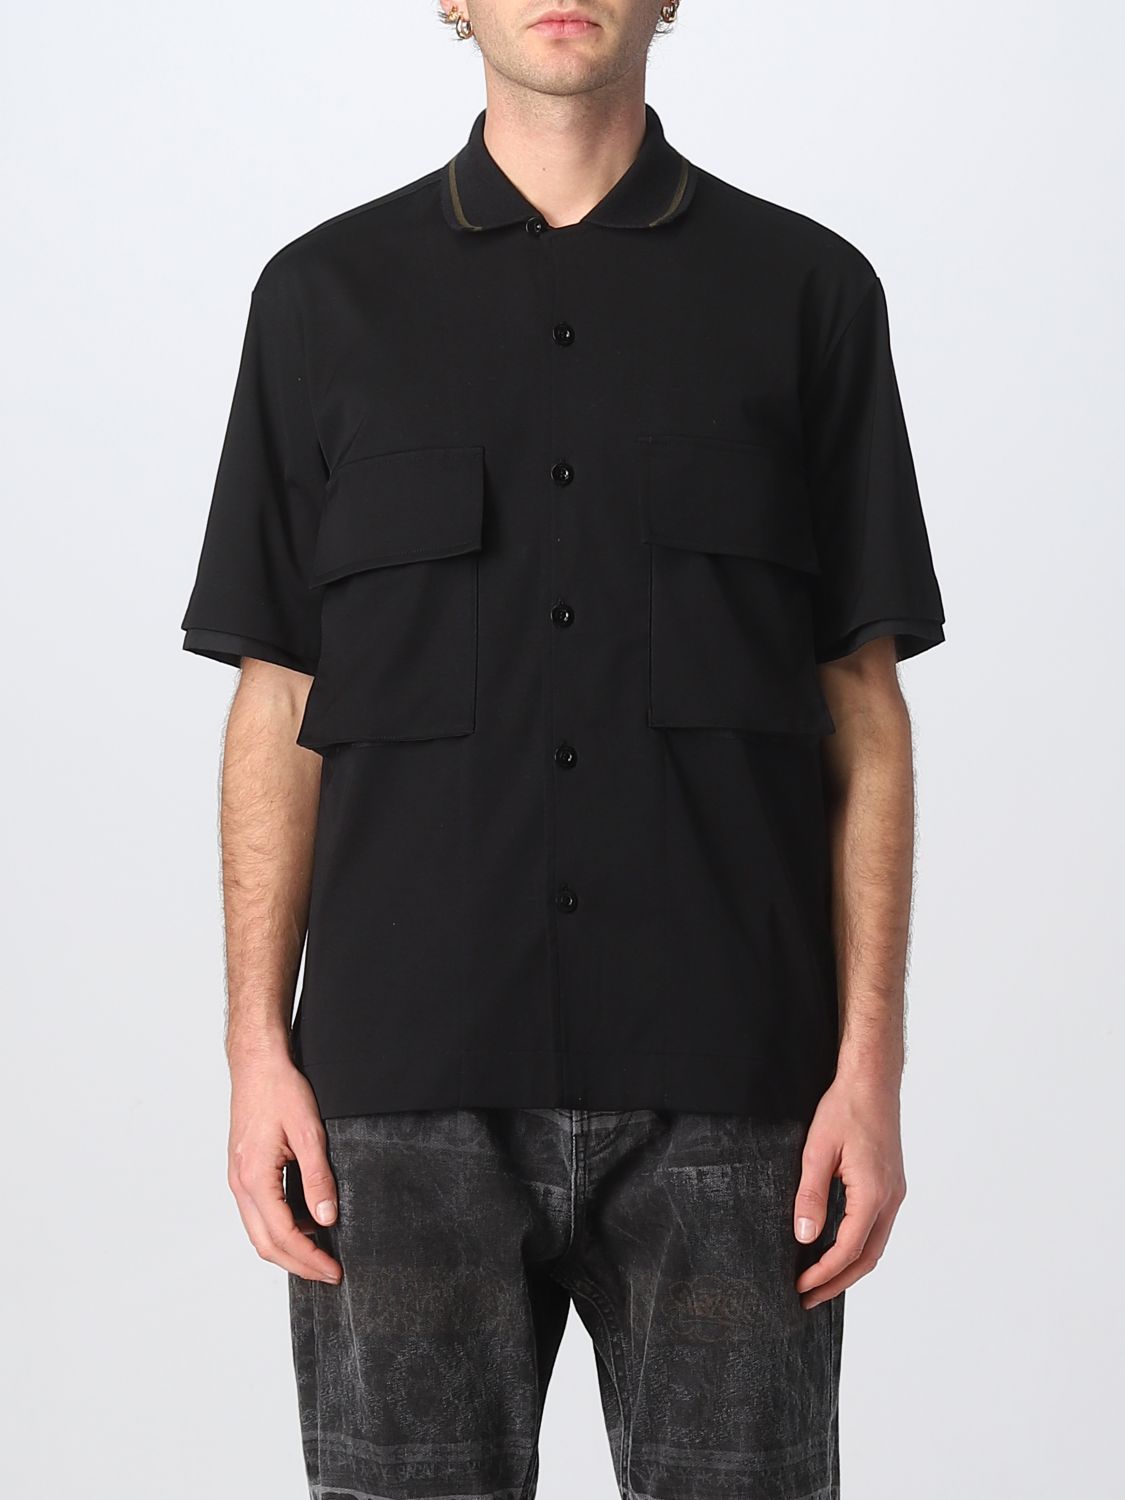 Shirt Sacai: Sacai shirt for man black 1